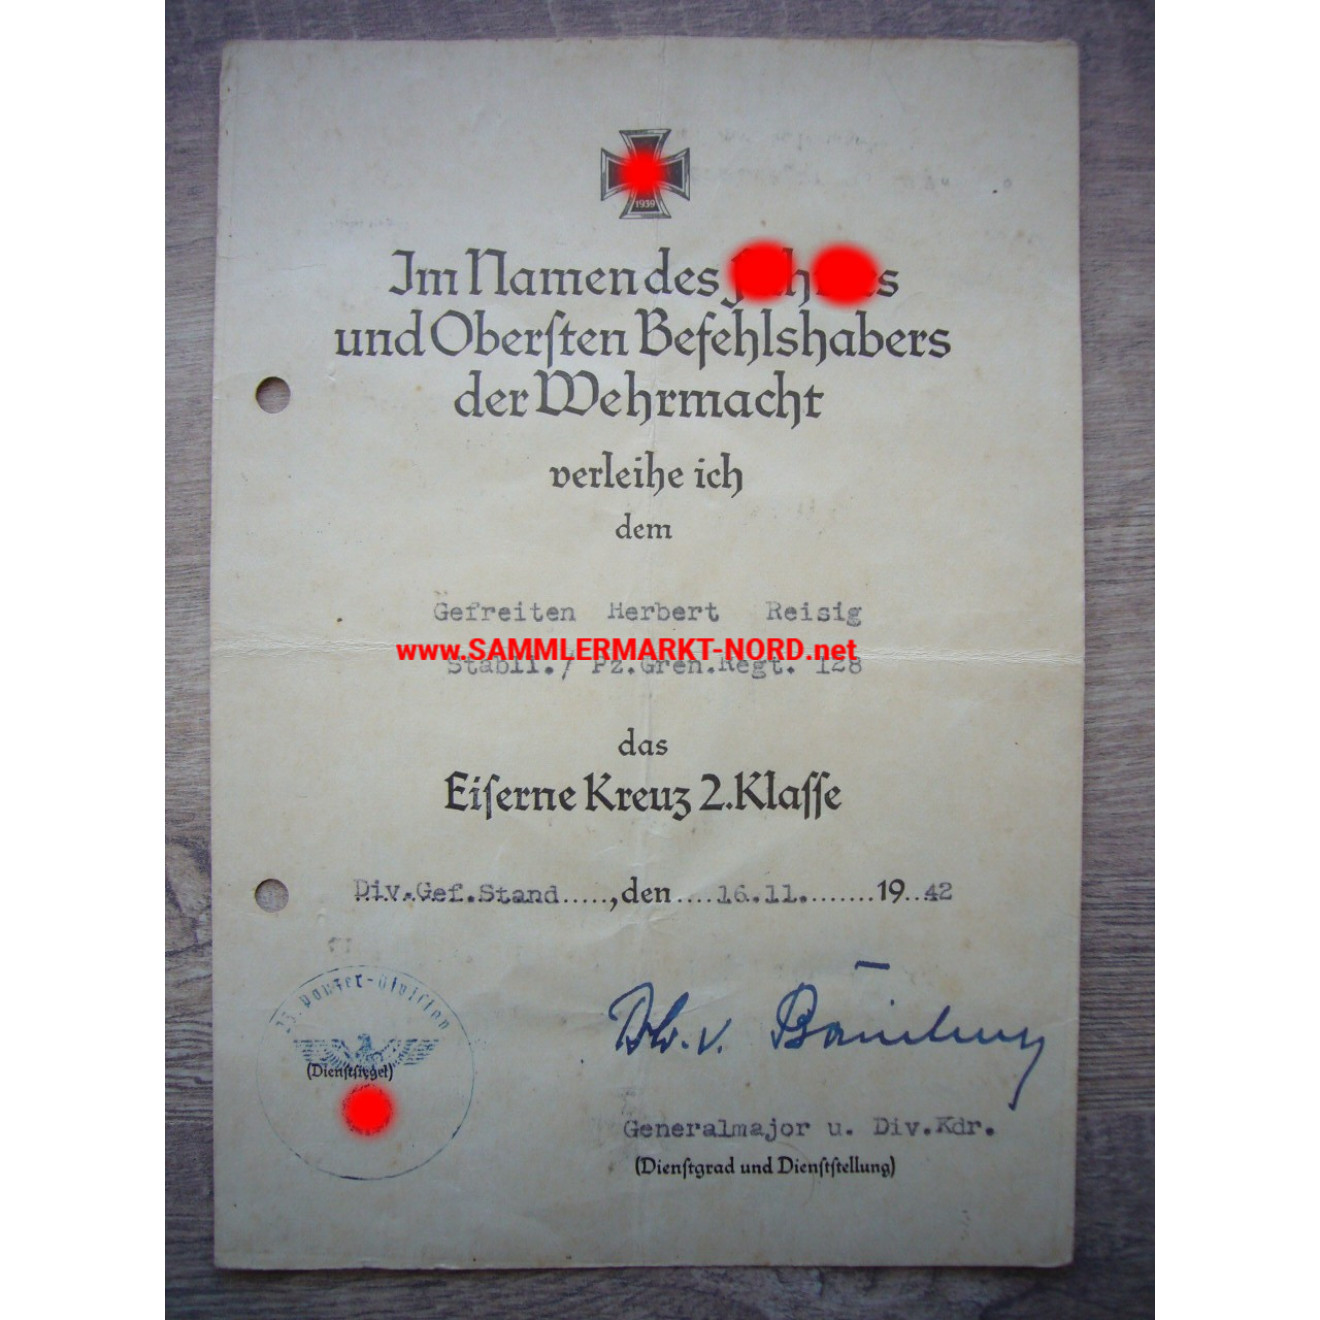 Iron Cross Certificate - 23. Tank Division - Major General HANS VON BOINEBURG-LENGSFELD Autograph